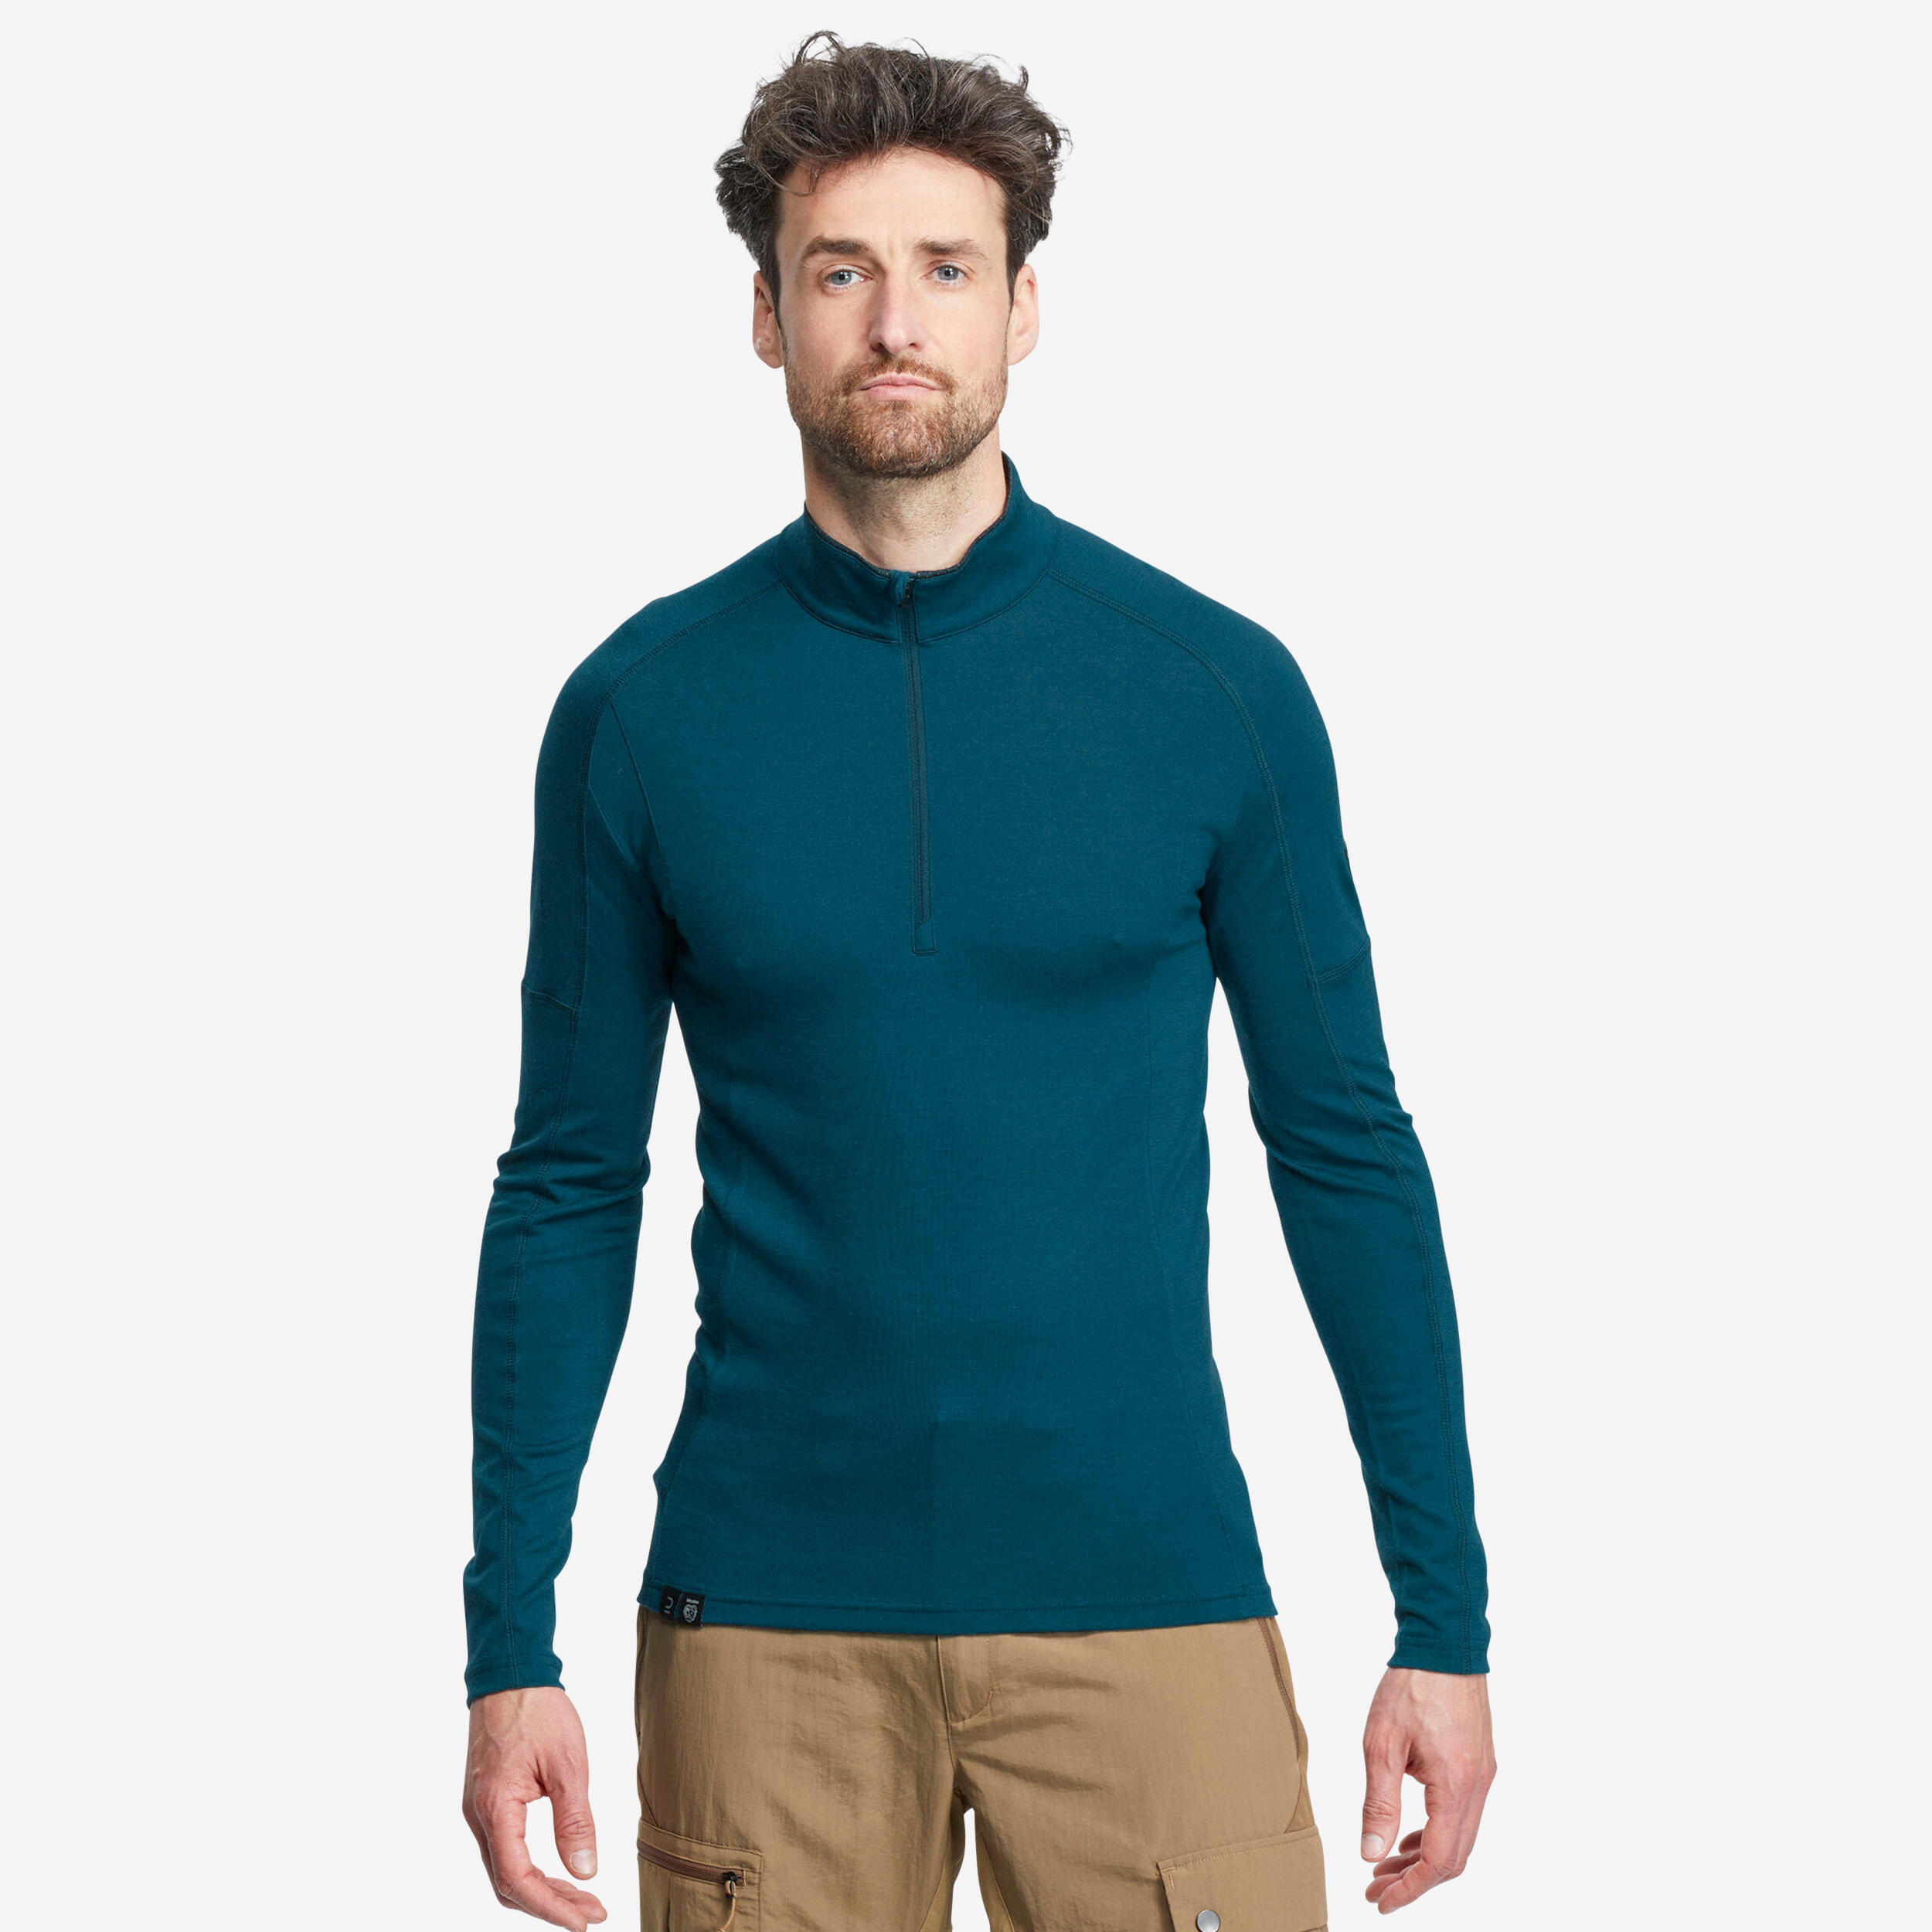 Men's Mountain Trekking Merino Wool Long-Sleeved T-Shirt with zip